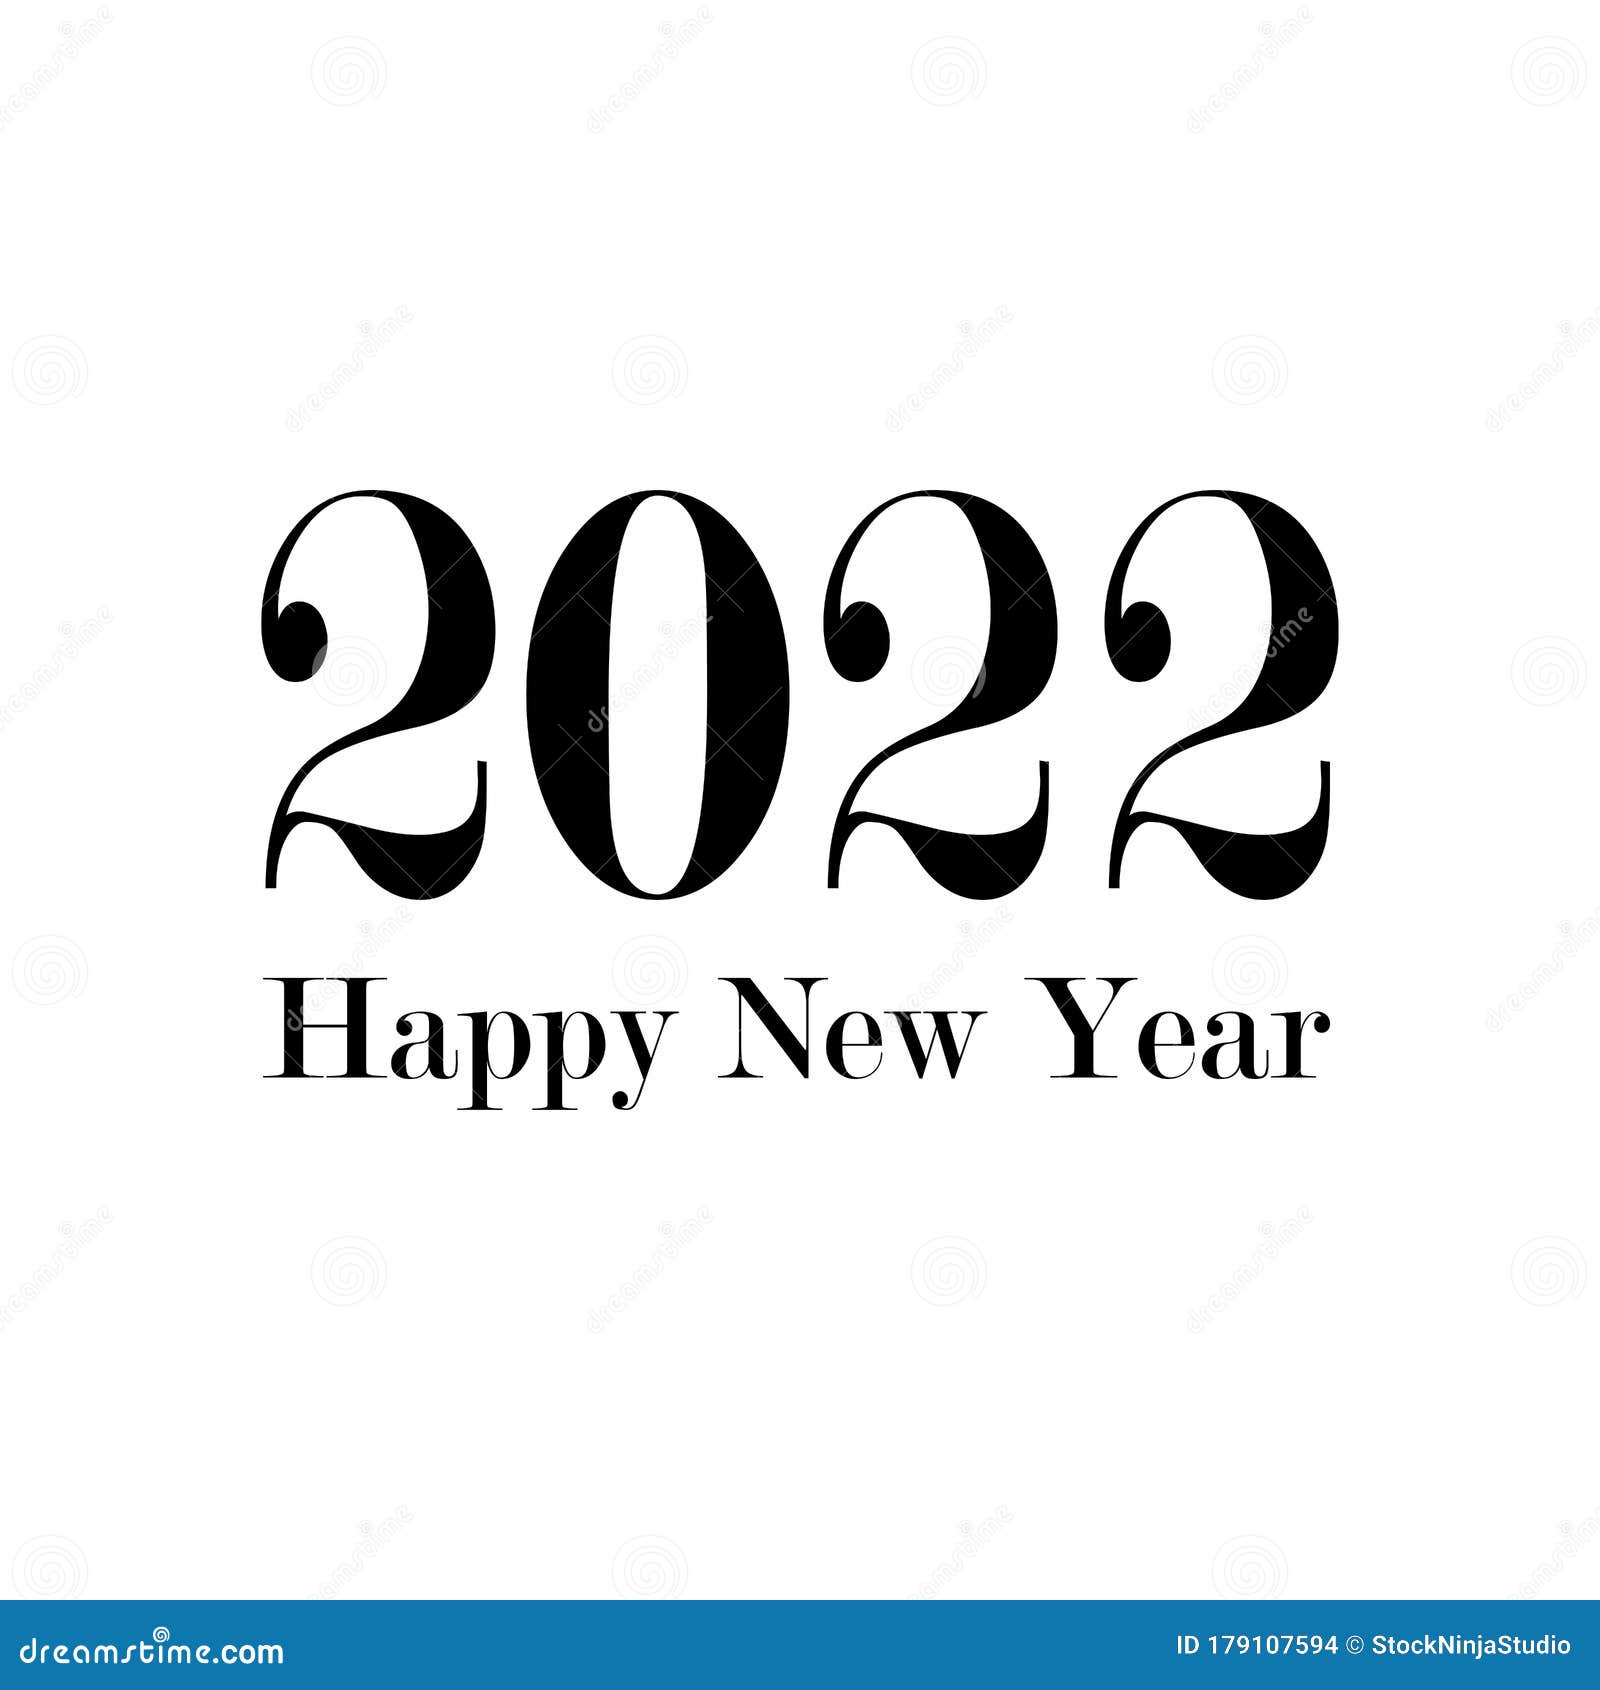 Happy New Year 2022 Design Template. Modern Design For Calendar